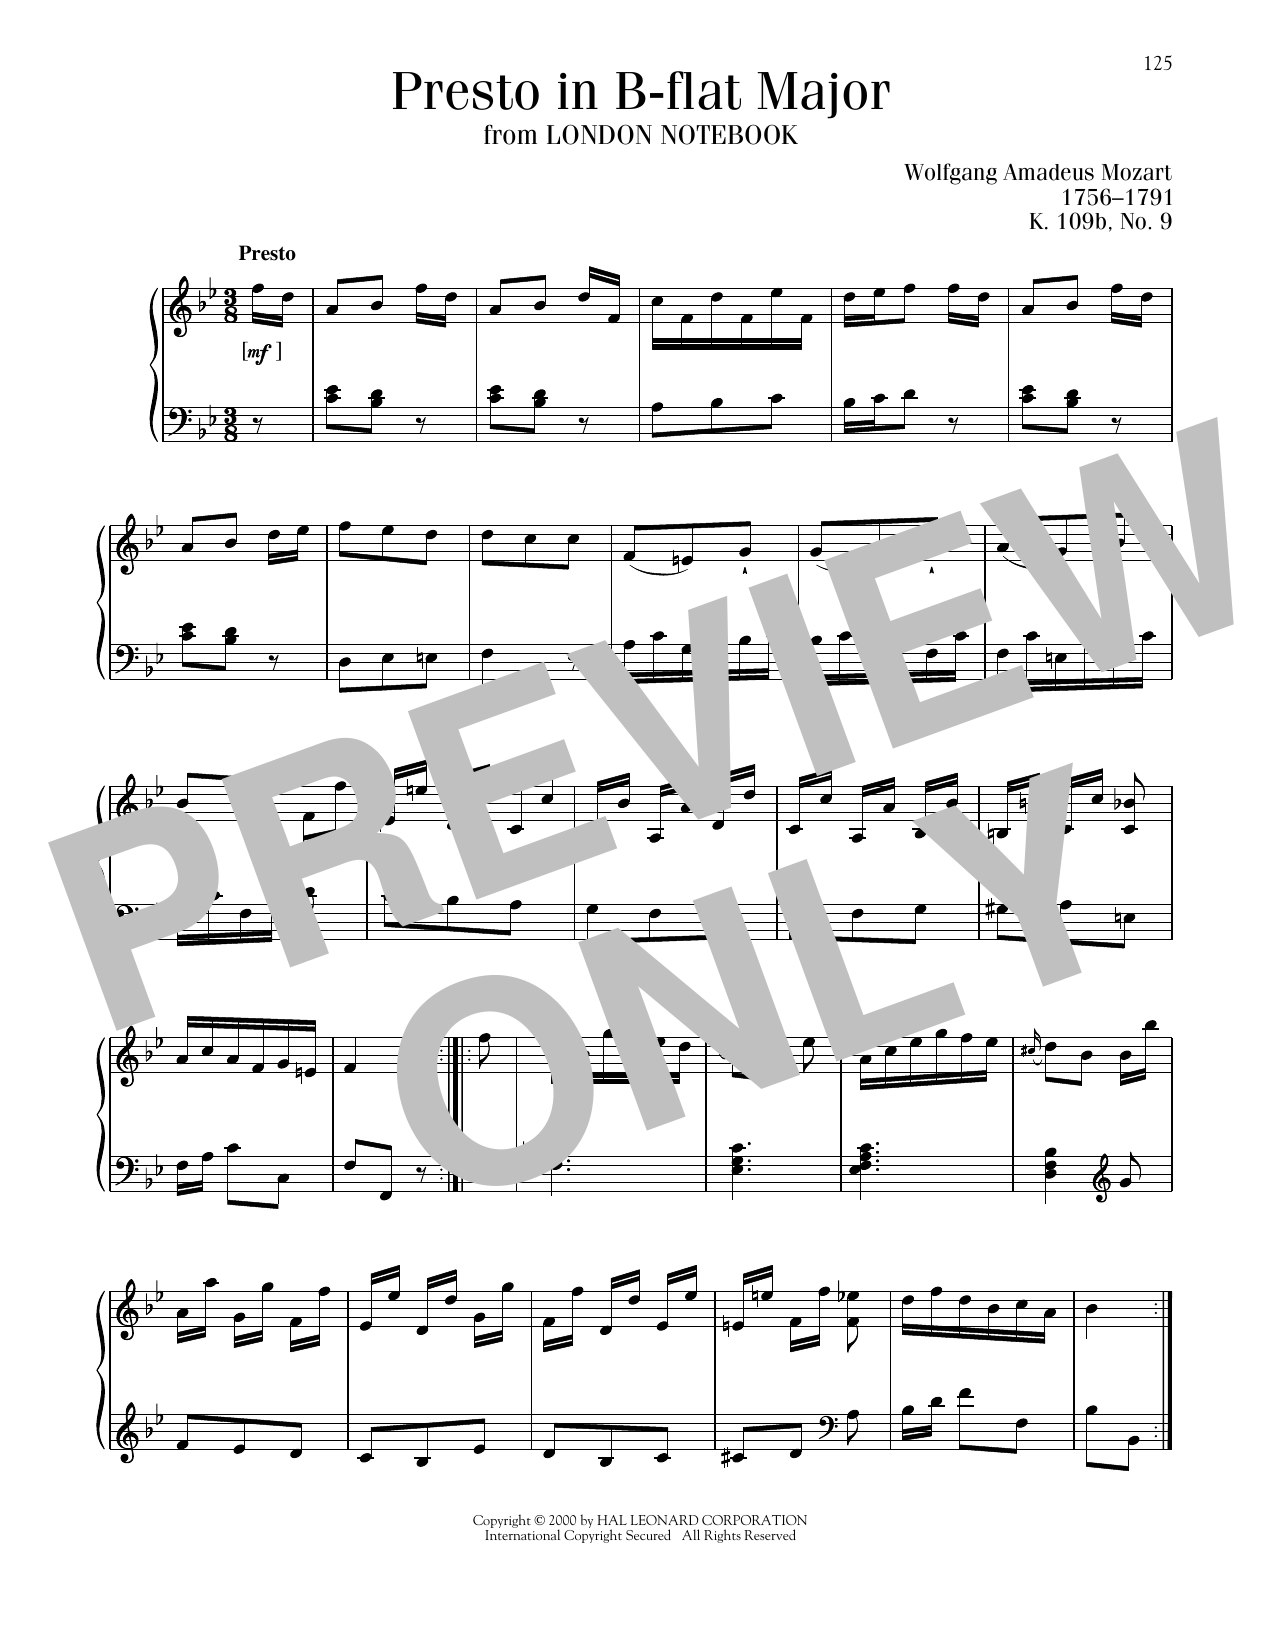 Wolfgang Amadeus Mozart Presto In B-Flat Major, K109b, No. 9 Sheet Music Notes & Chords for Piano Solo - Download or Print PDF